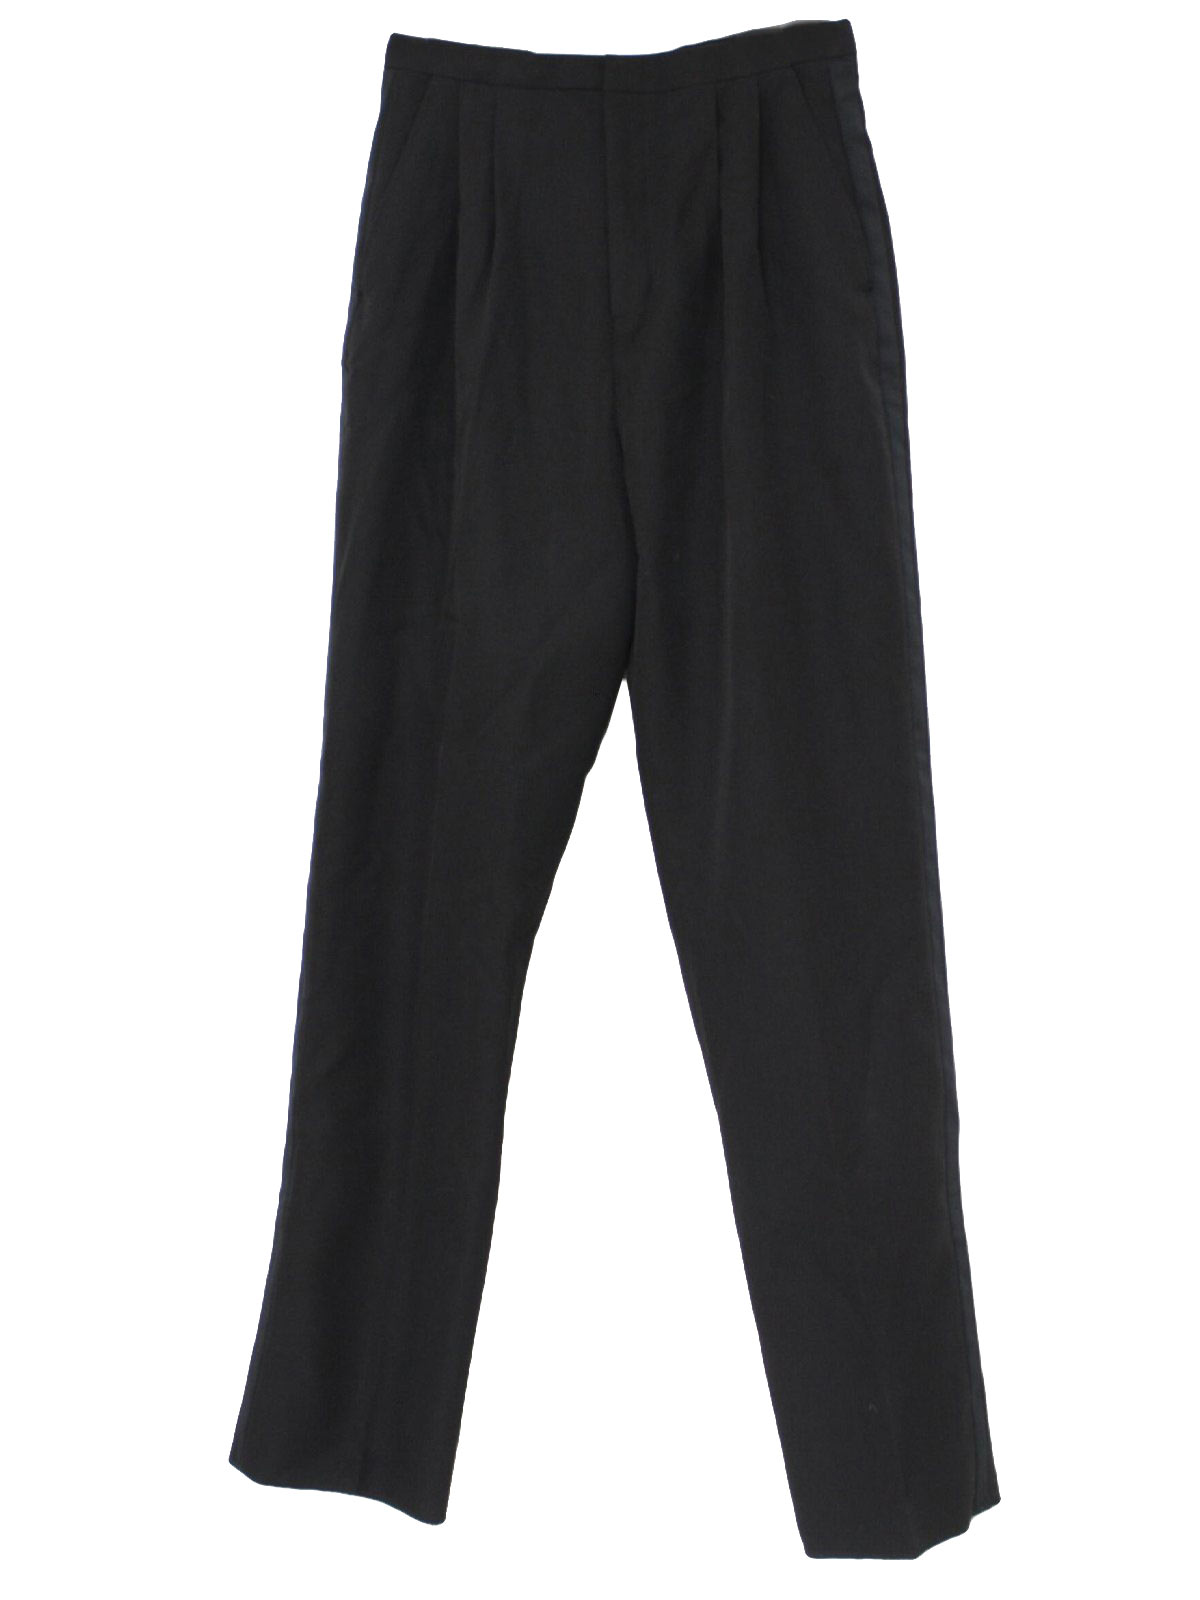 Retro 1980's Pants (Mina) : 80s -Mina- Womens black polyester tuxedo ...